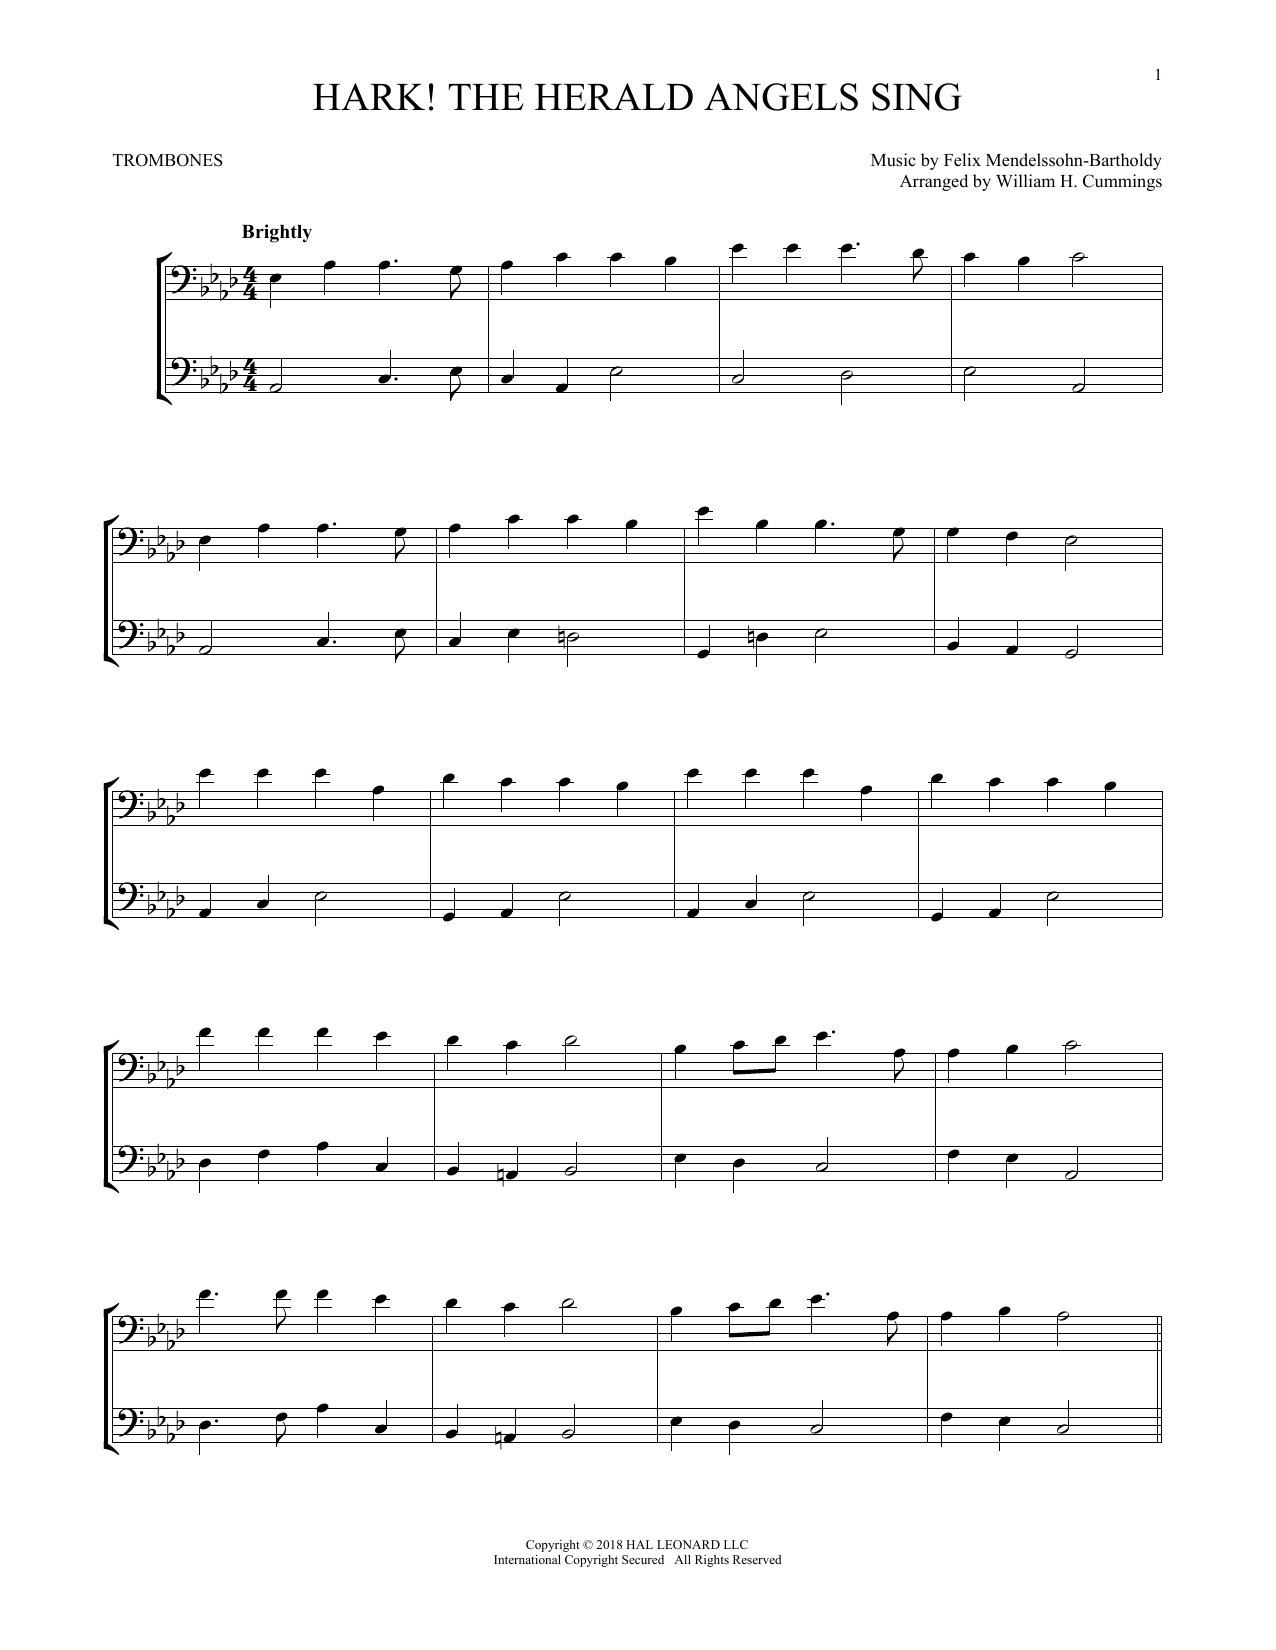 Felix Mendelssohn Hark! The Herald Angels Sing Sheet Music Notes & Chords for Trombone Transcription - Download or Print PDF